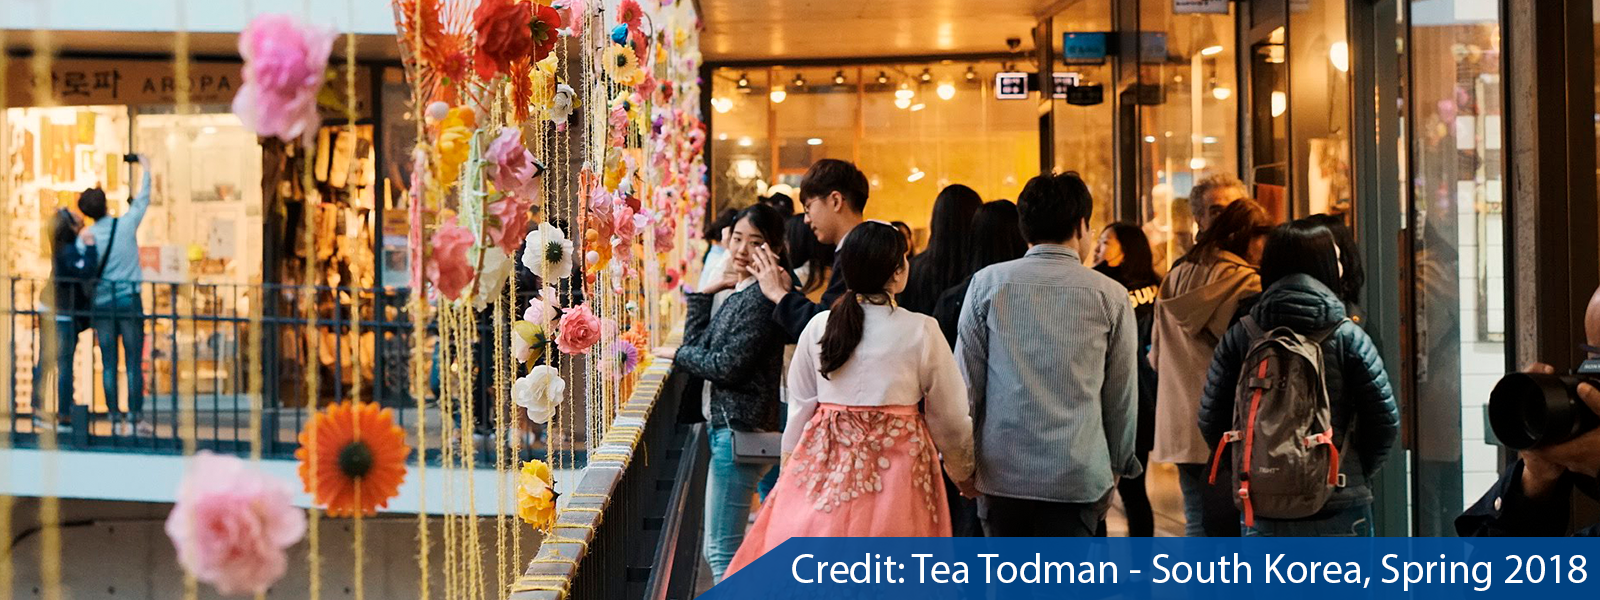 Tea Todman - South Korea, Spring 2018